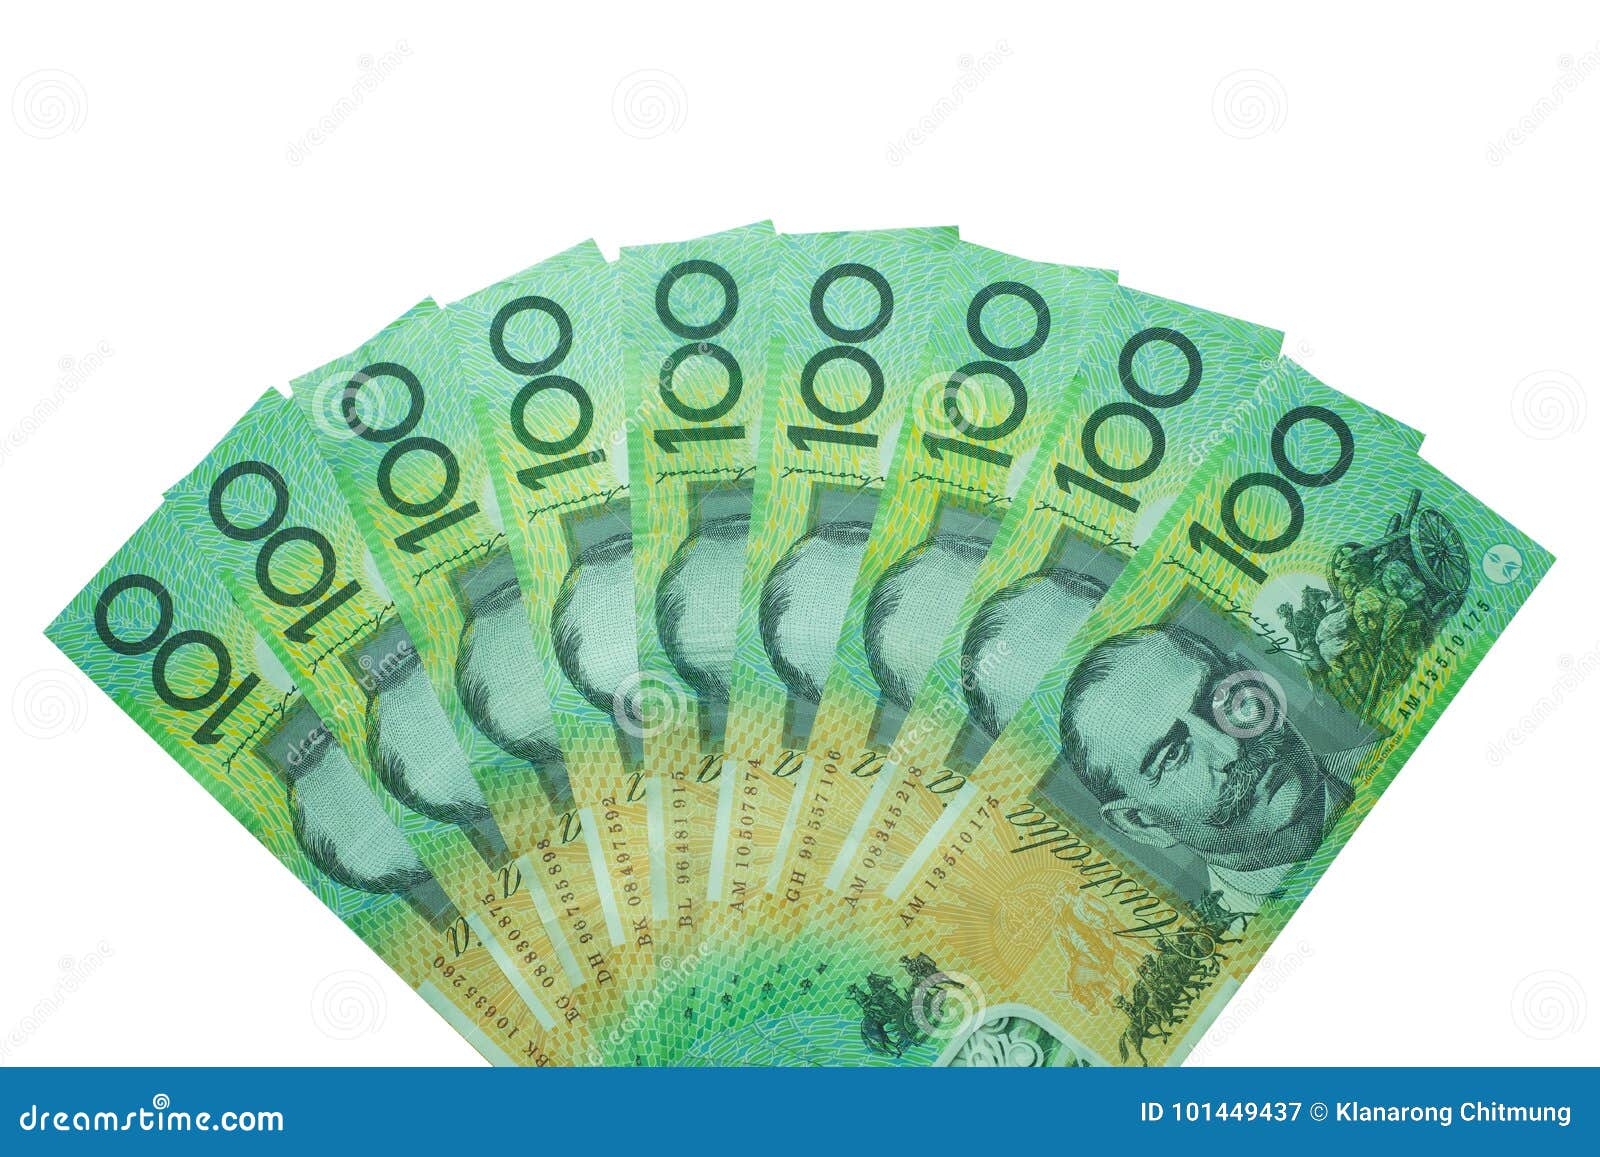 Sanktion mental Ydmyghed Australian Dollar, Australia Money 100 Dollars Banknotes Stack on White  Background Stock Image - Image of australian, investment: 101449437